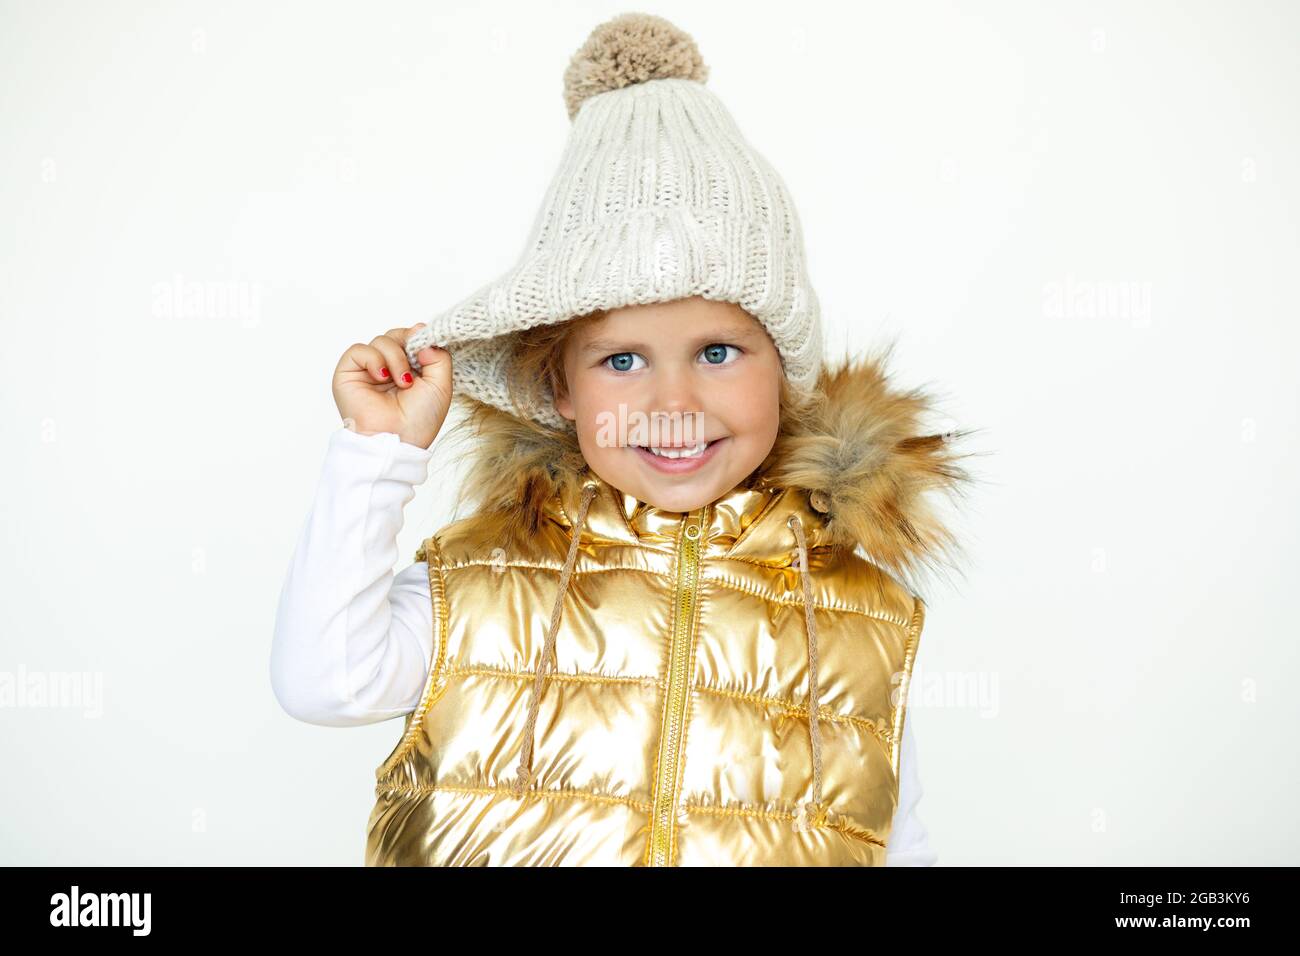 Moda infantil. Foto de niña en cálido sombrero de lana natural y chaleco dorado  abrigo niños con capucha, chaleco, foto Fotografía de stock - Alamy